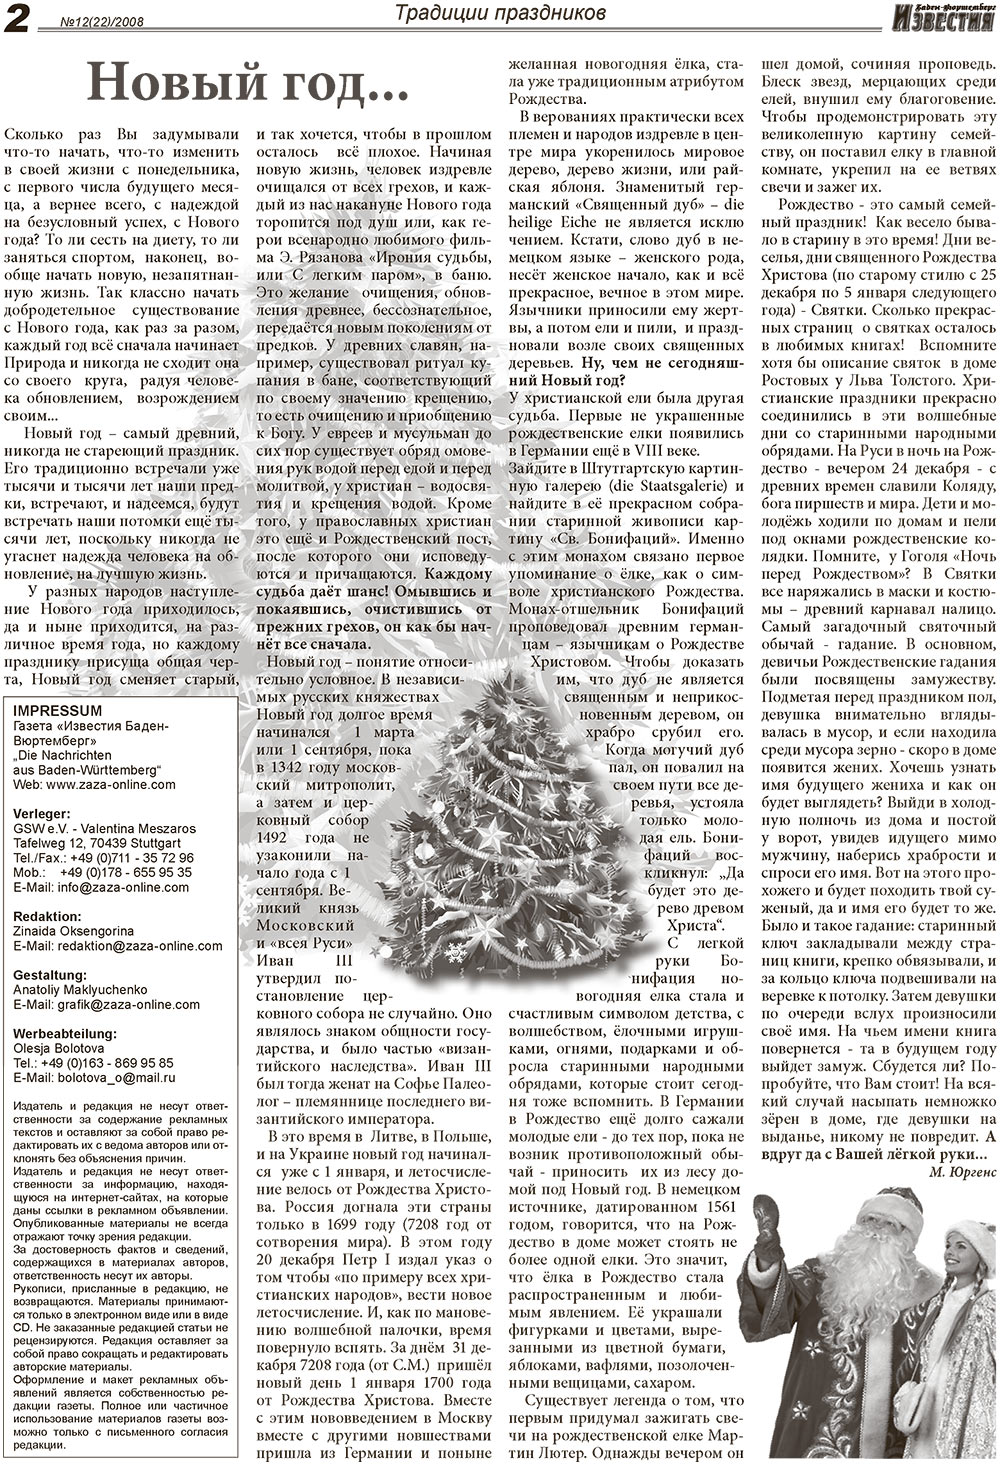 Известия BW (газета). 2008 год, номер 12, стр. 2